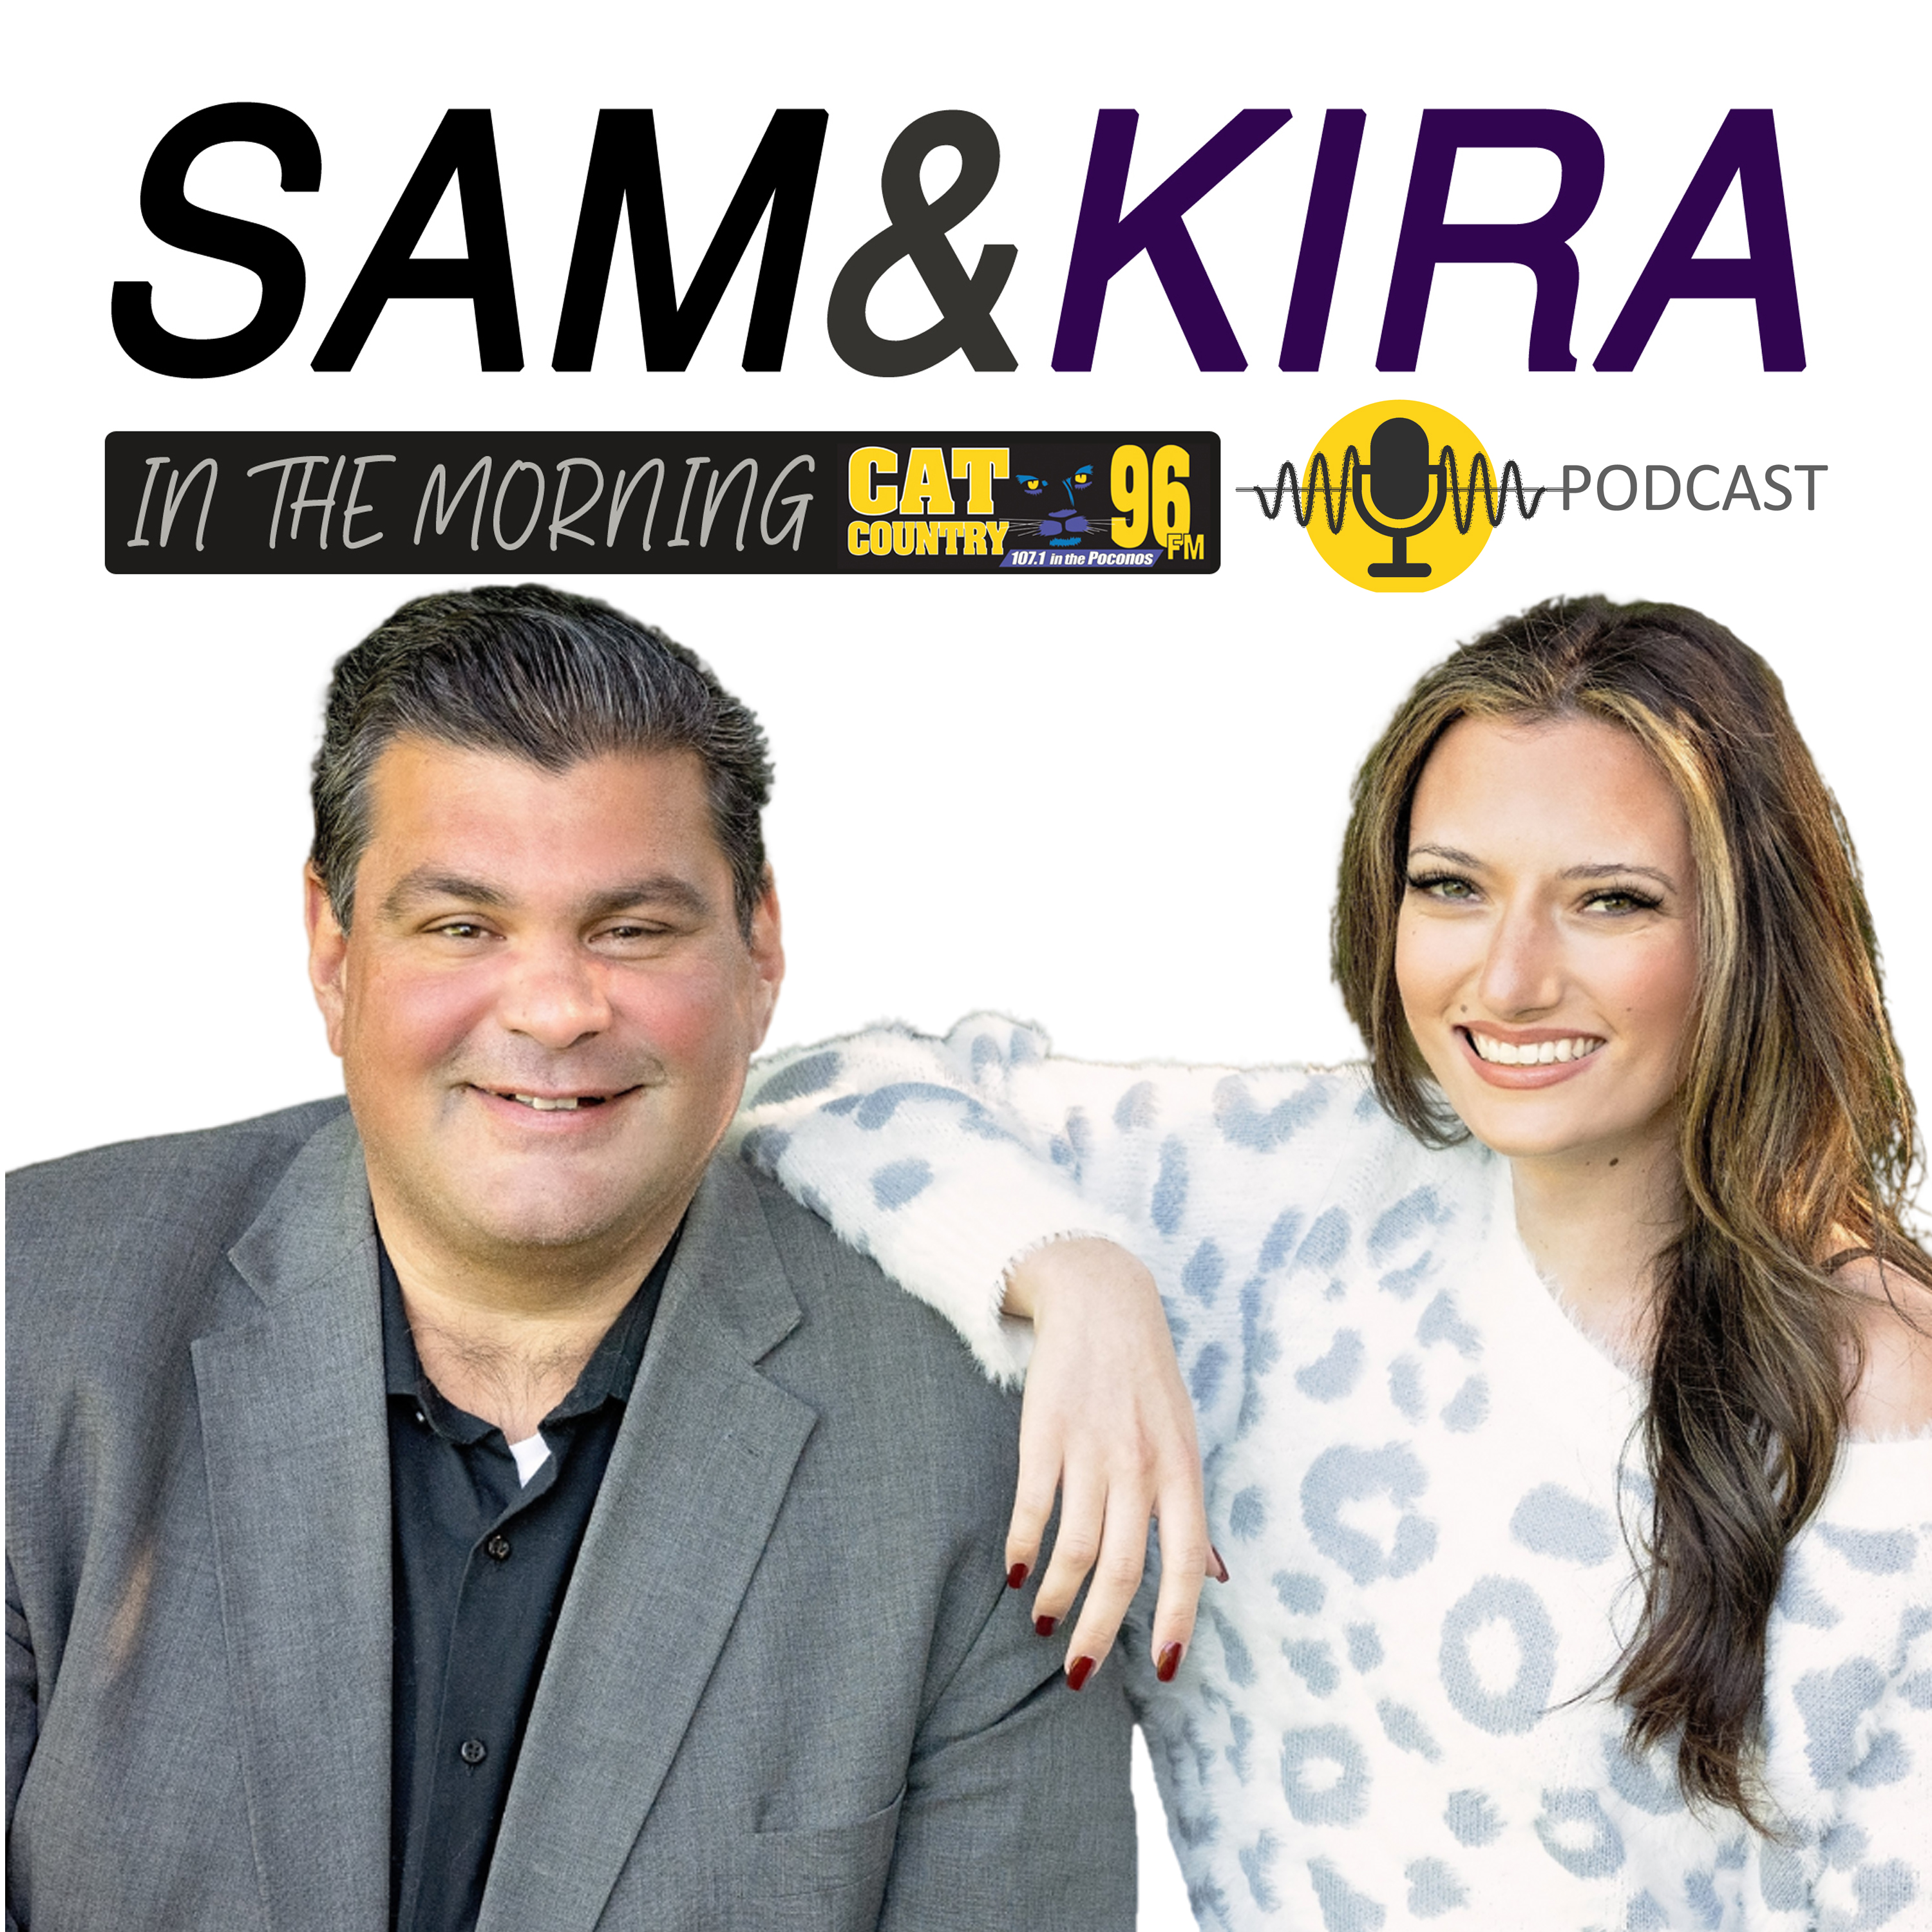 Sam & Kira After Breakfast: David Nail